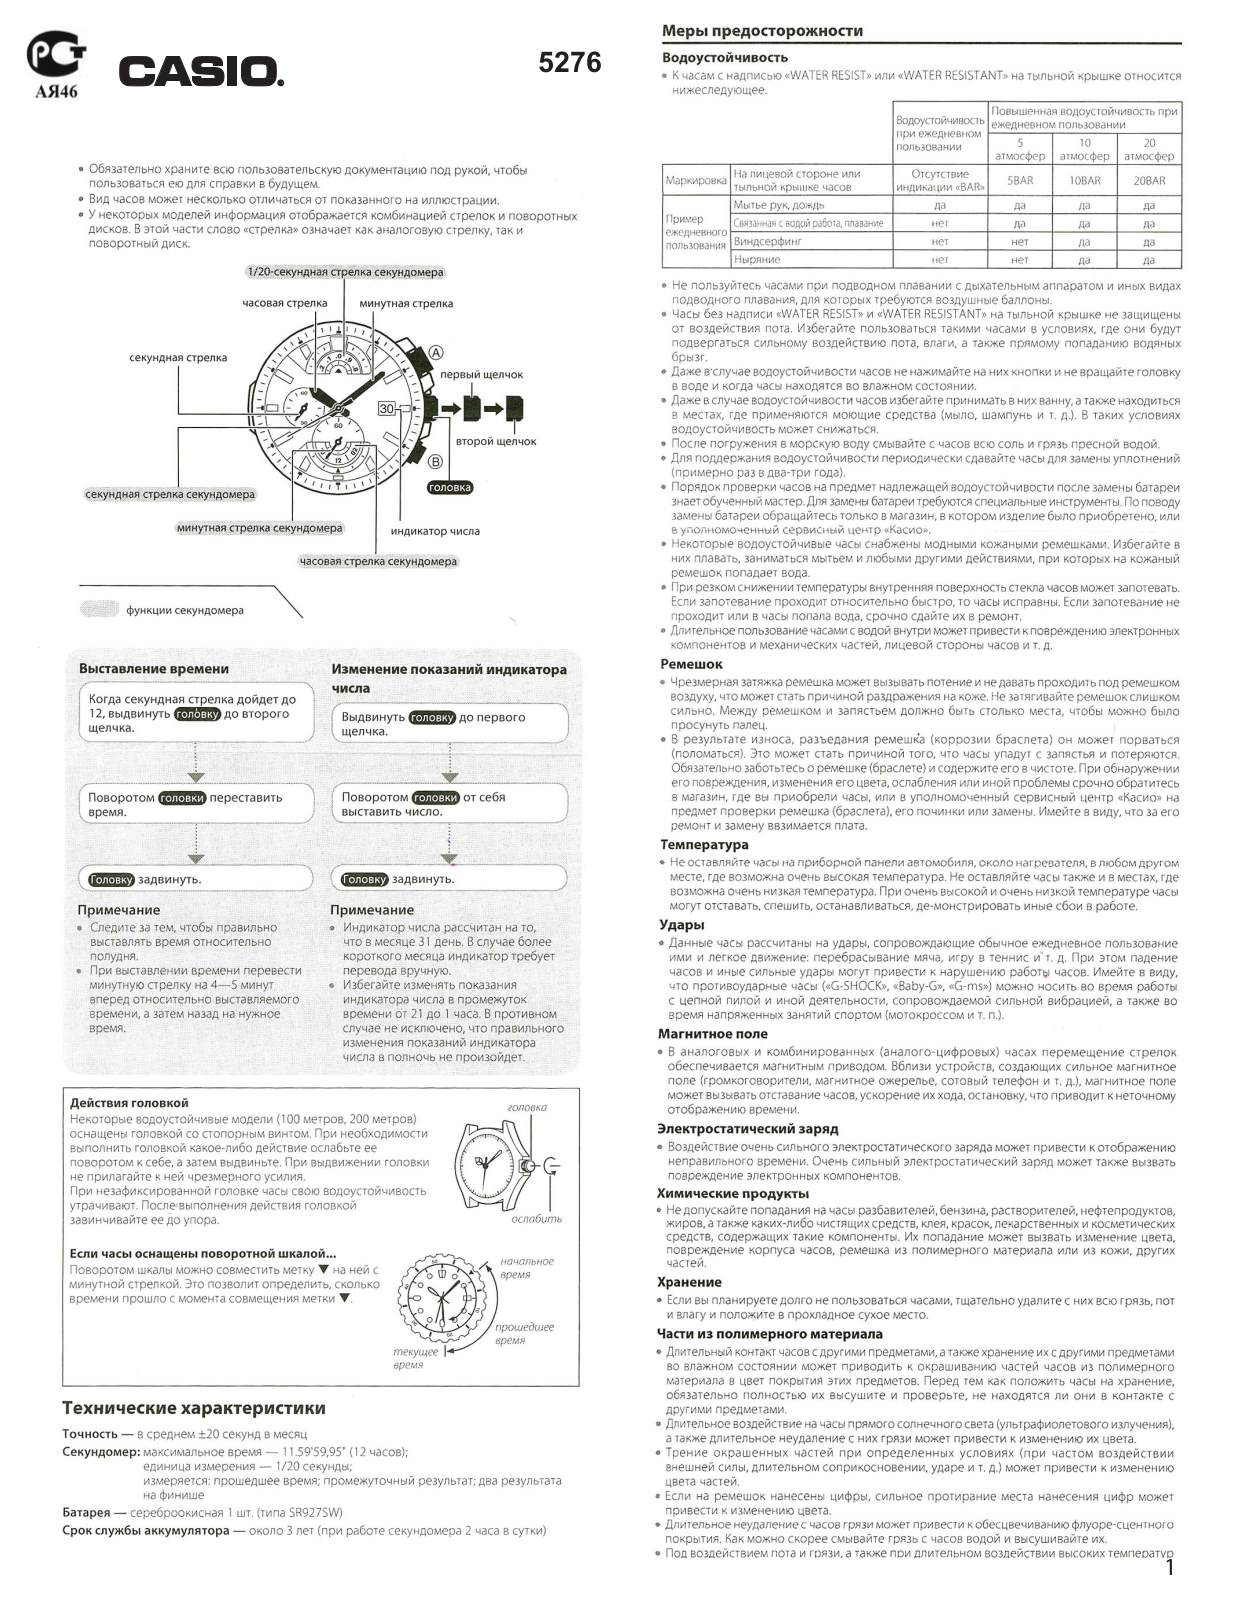 Casio EFR-520RB-1A User Manual